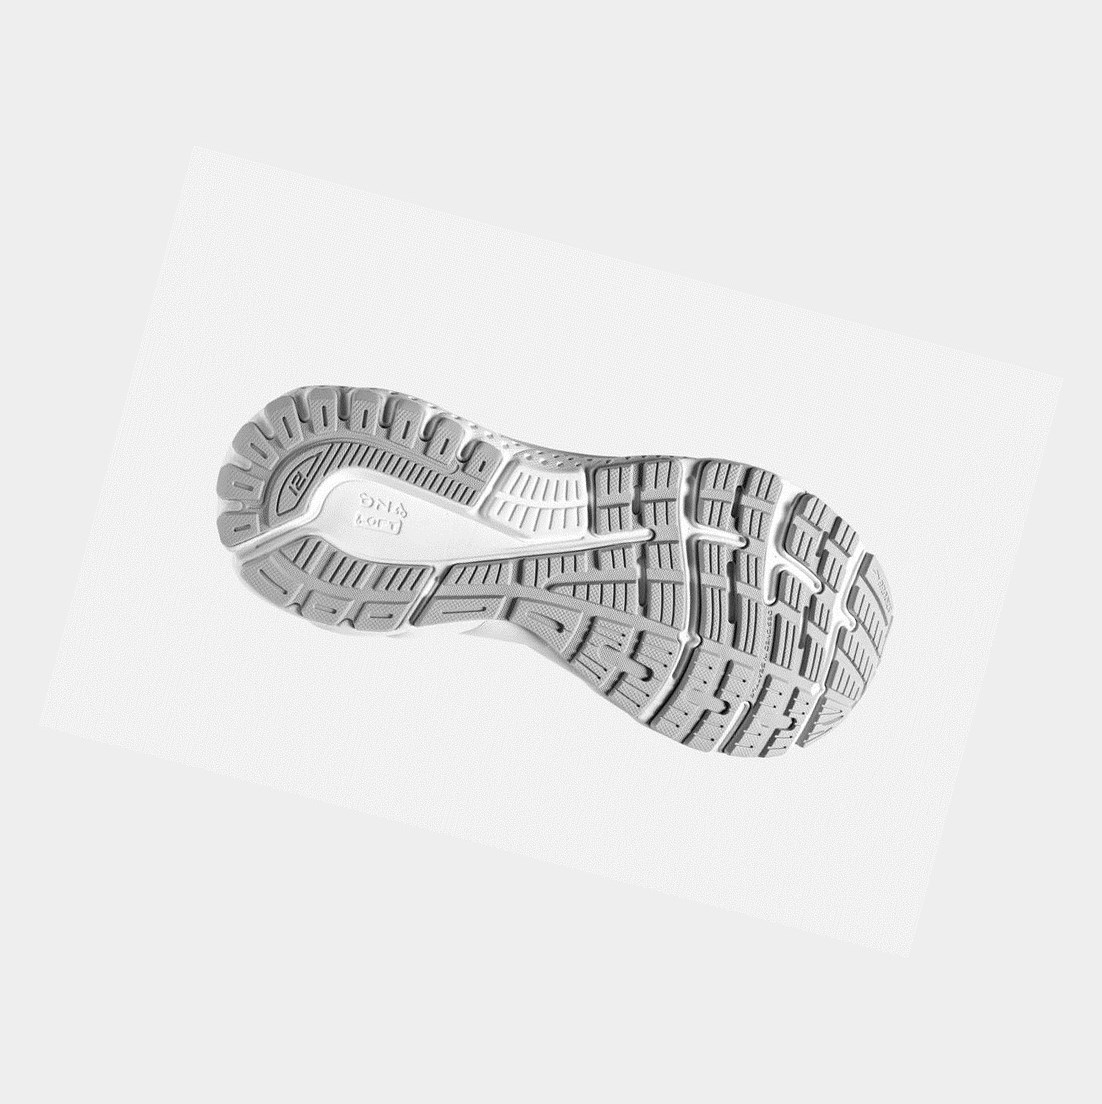 Brooks Adrenaline GTS 21 Women's Walking Shoes White / Grey / Silver | PLBW-04368